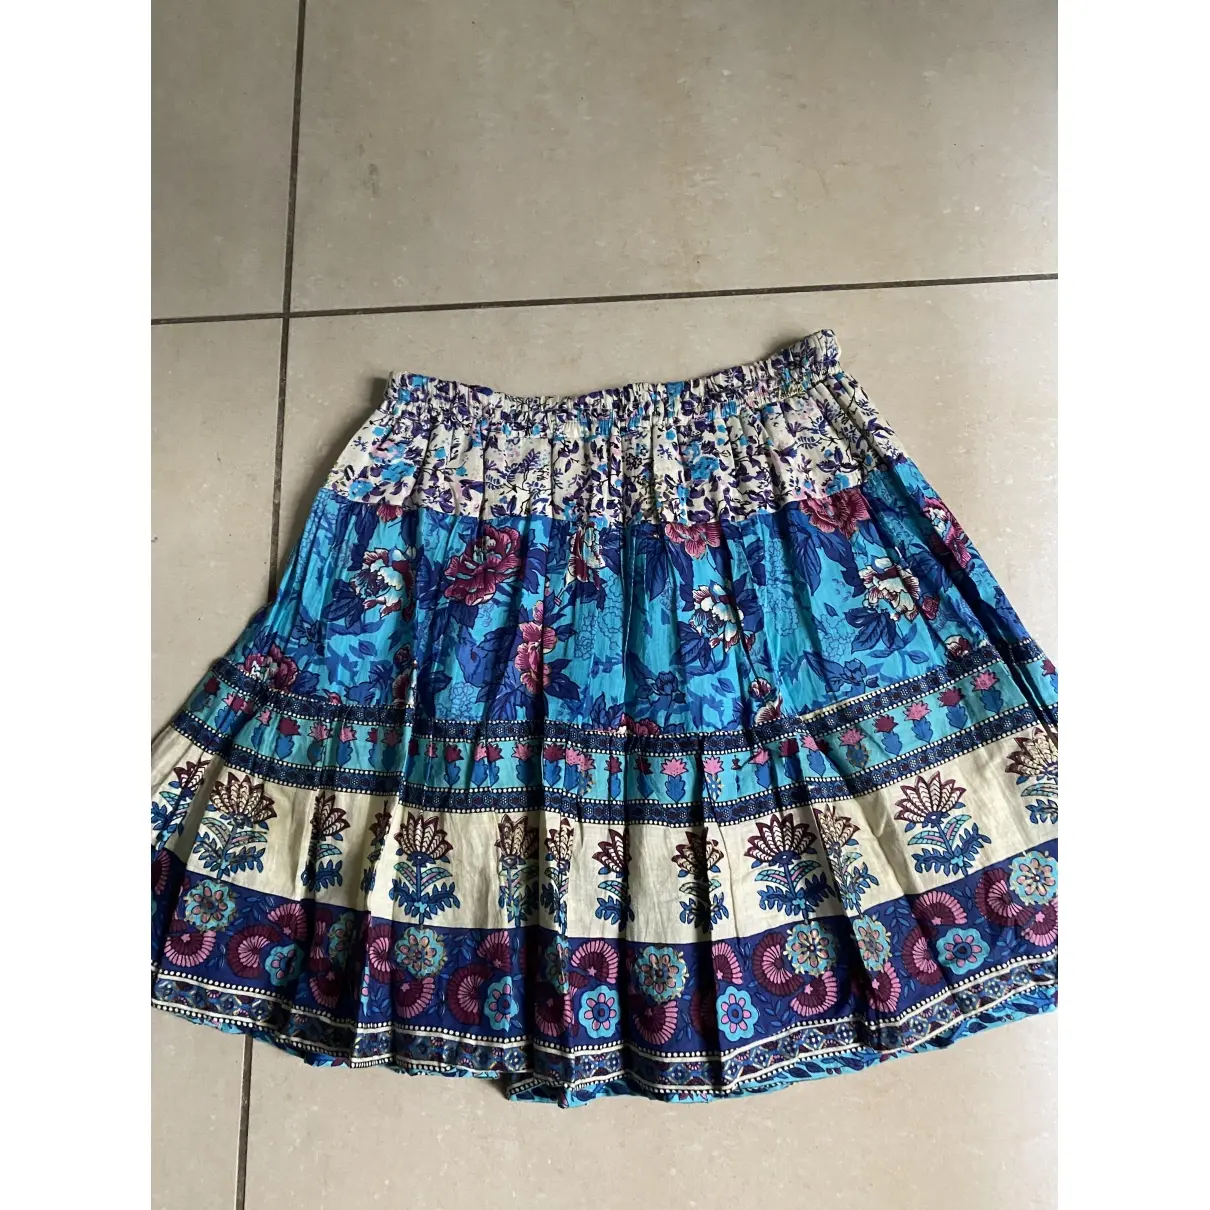 Albertine Mini skirt for sale